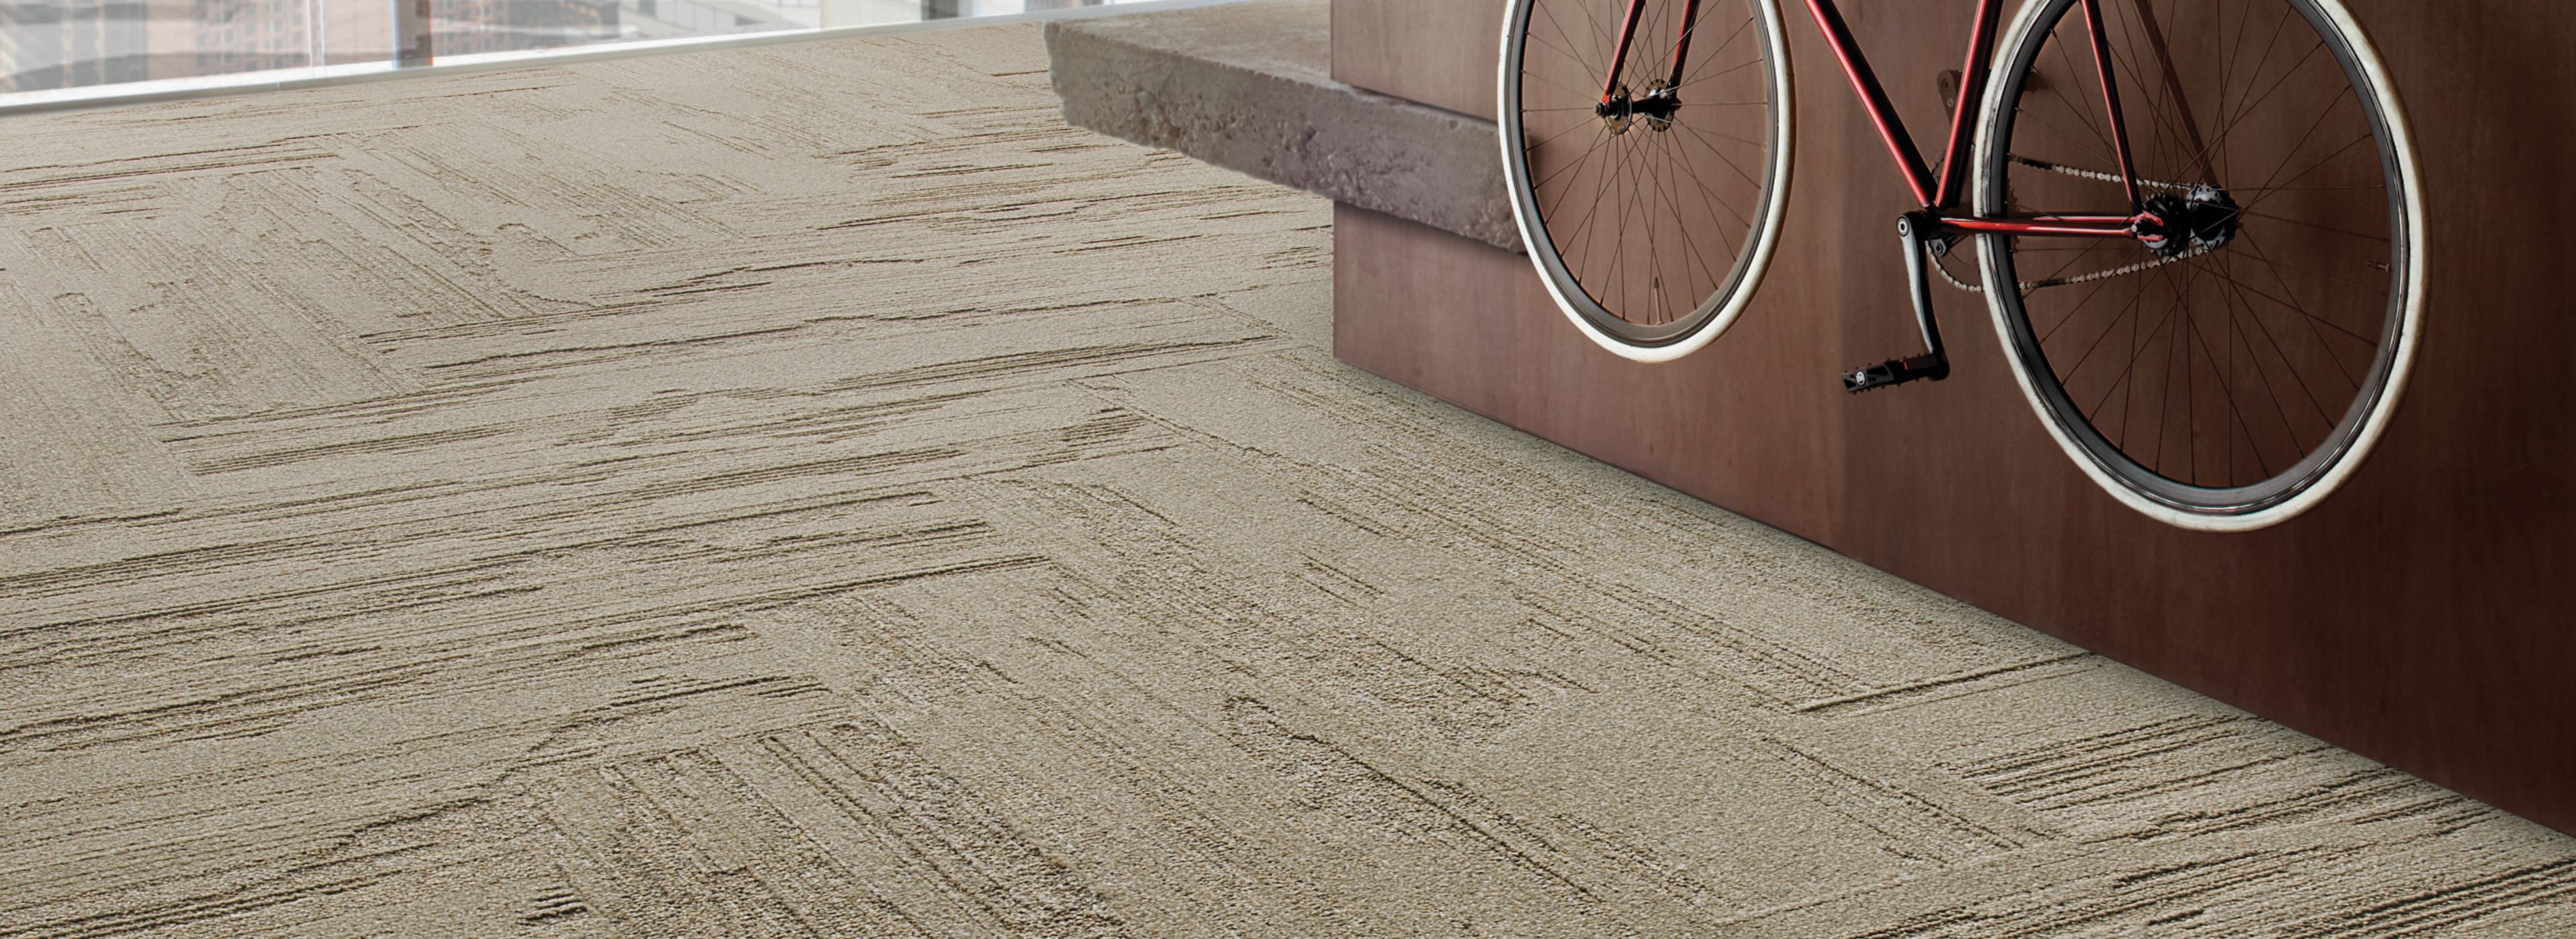 Interface UR501 plank carpet tile in office common area with bike  afbeeldingnummer 1